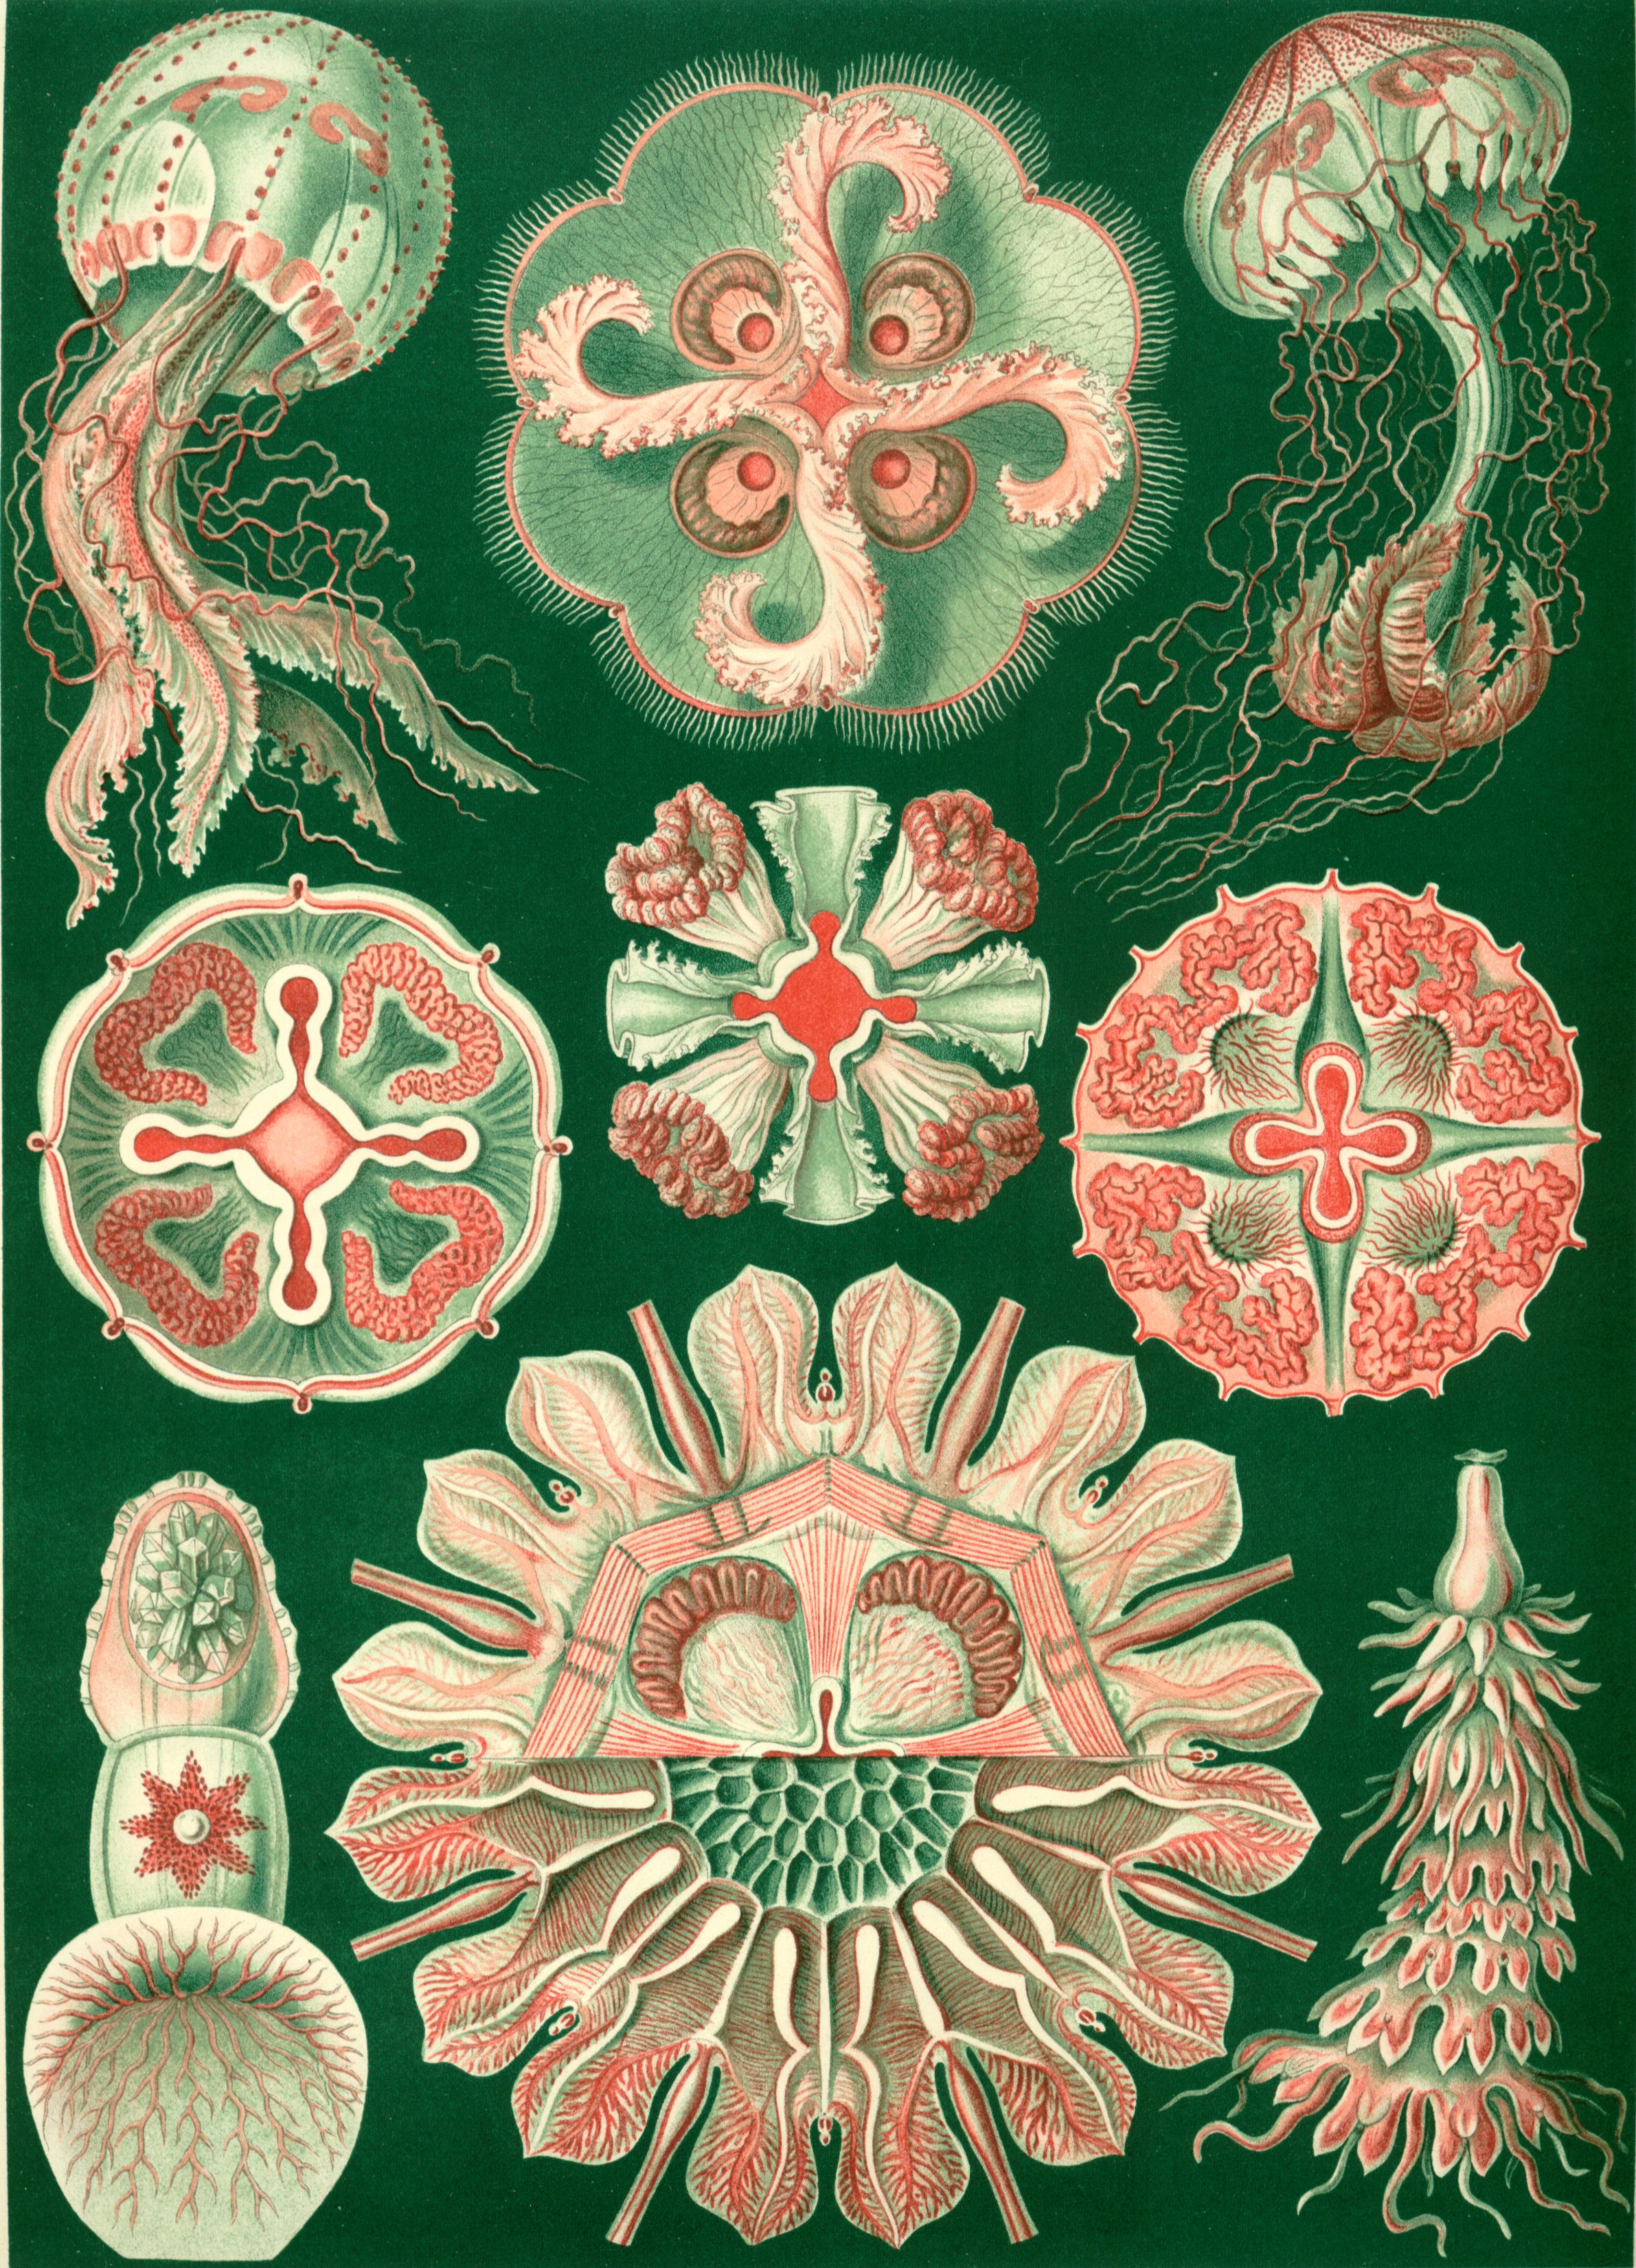 100 Beautiful Illustrations of Biologist Ernst Haeckel ... - 2382 x 3303 jpeg 1837kB